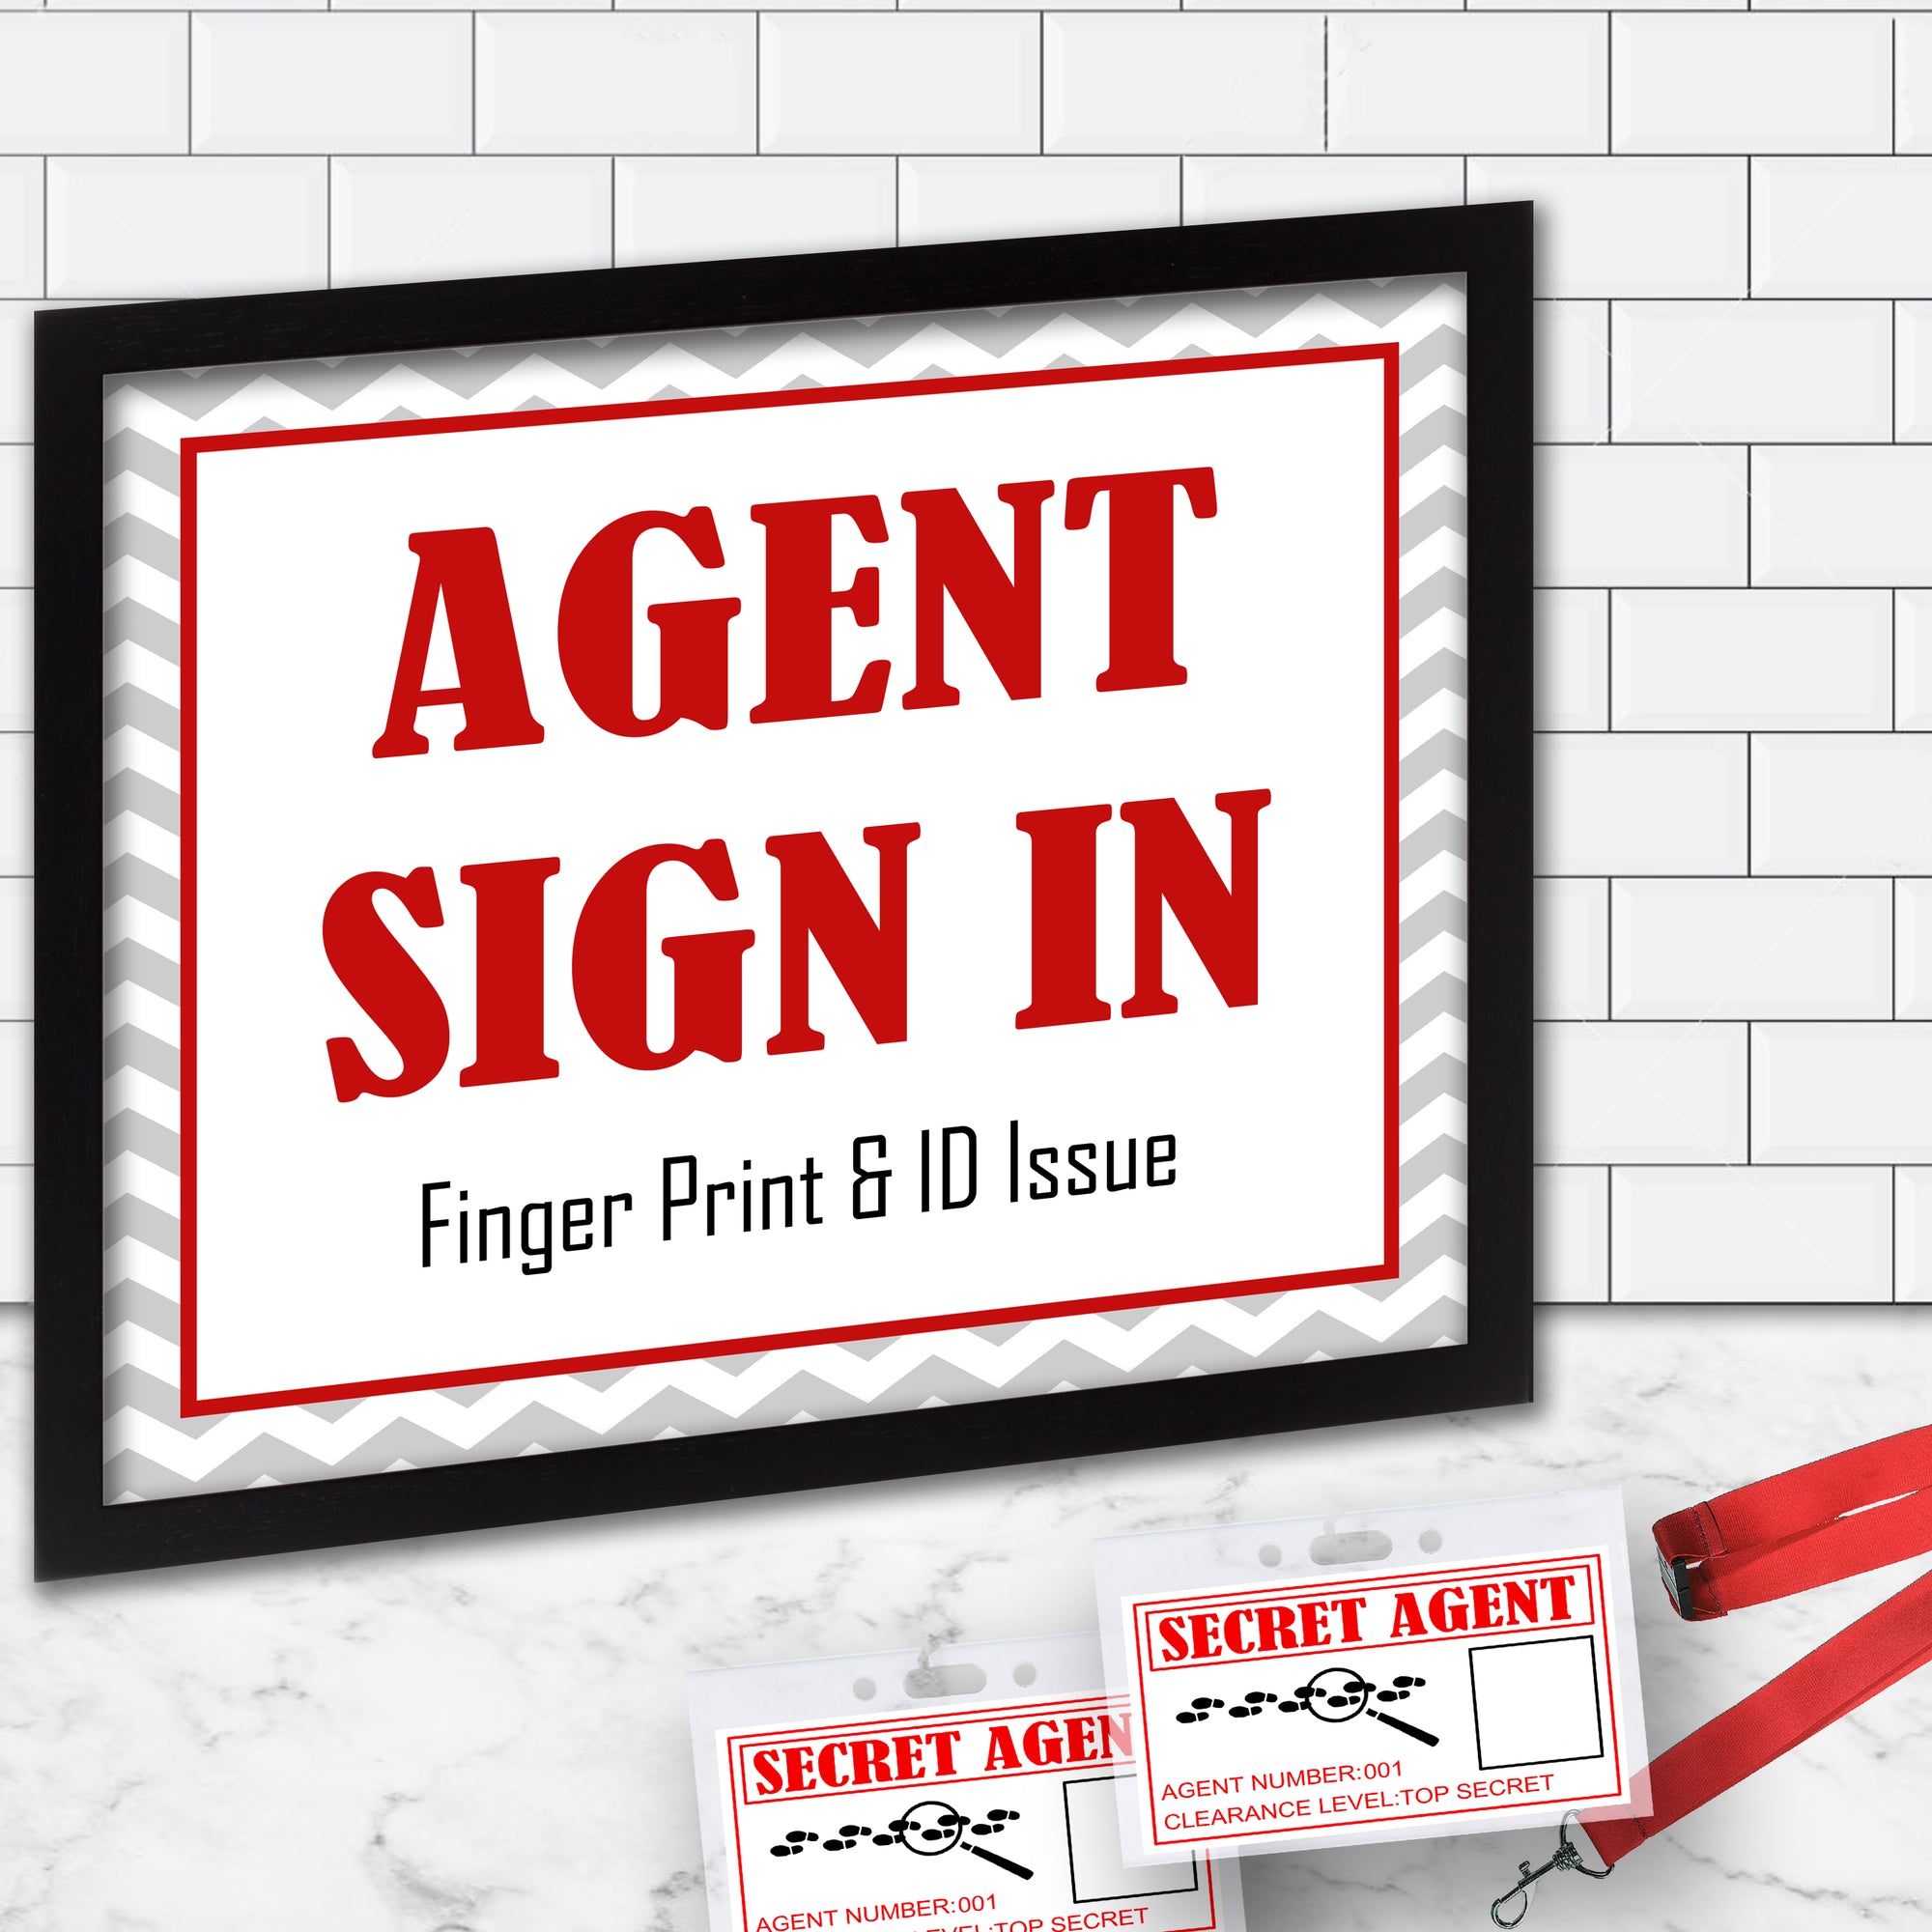 secret agent party, spy birthday ideas, secret agent badge, birthday party ideas, agent sign in printable chart, code name sign